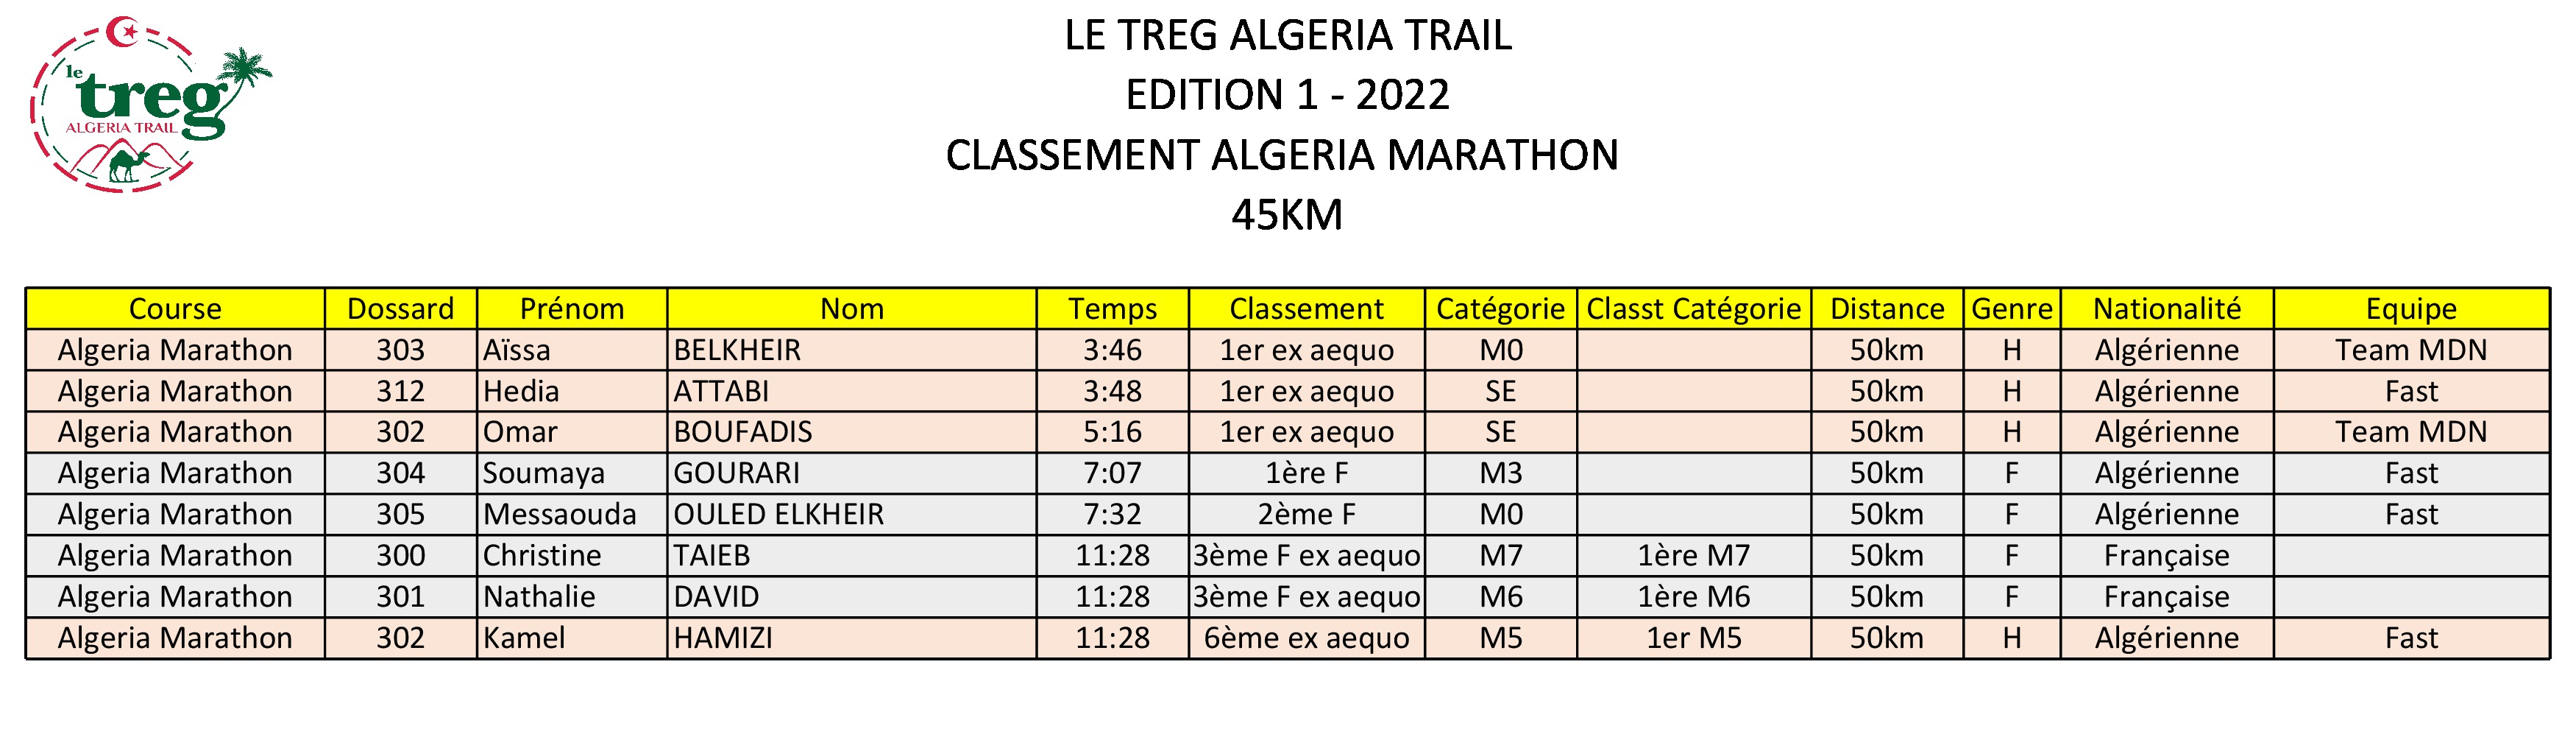 Classement Algéria Marathon 45km 2022.jpg